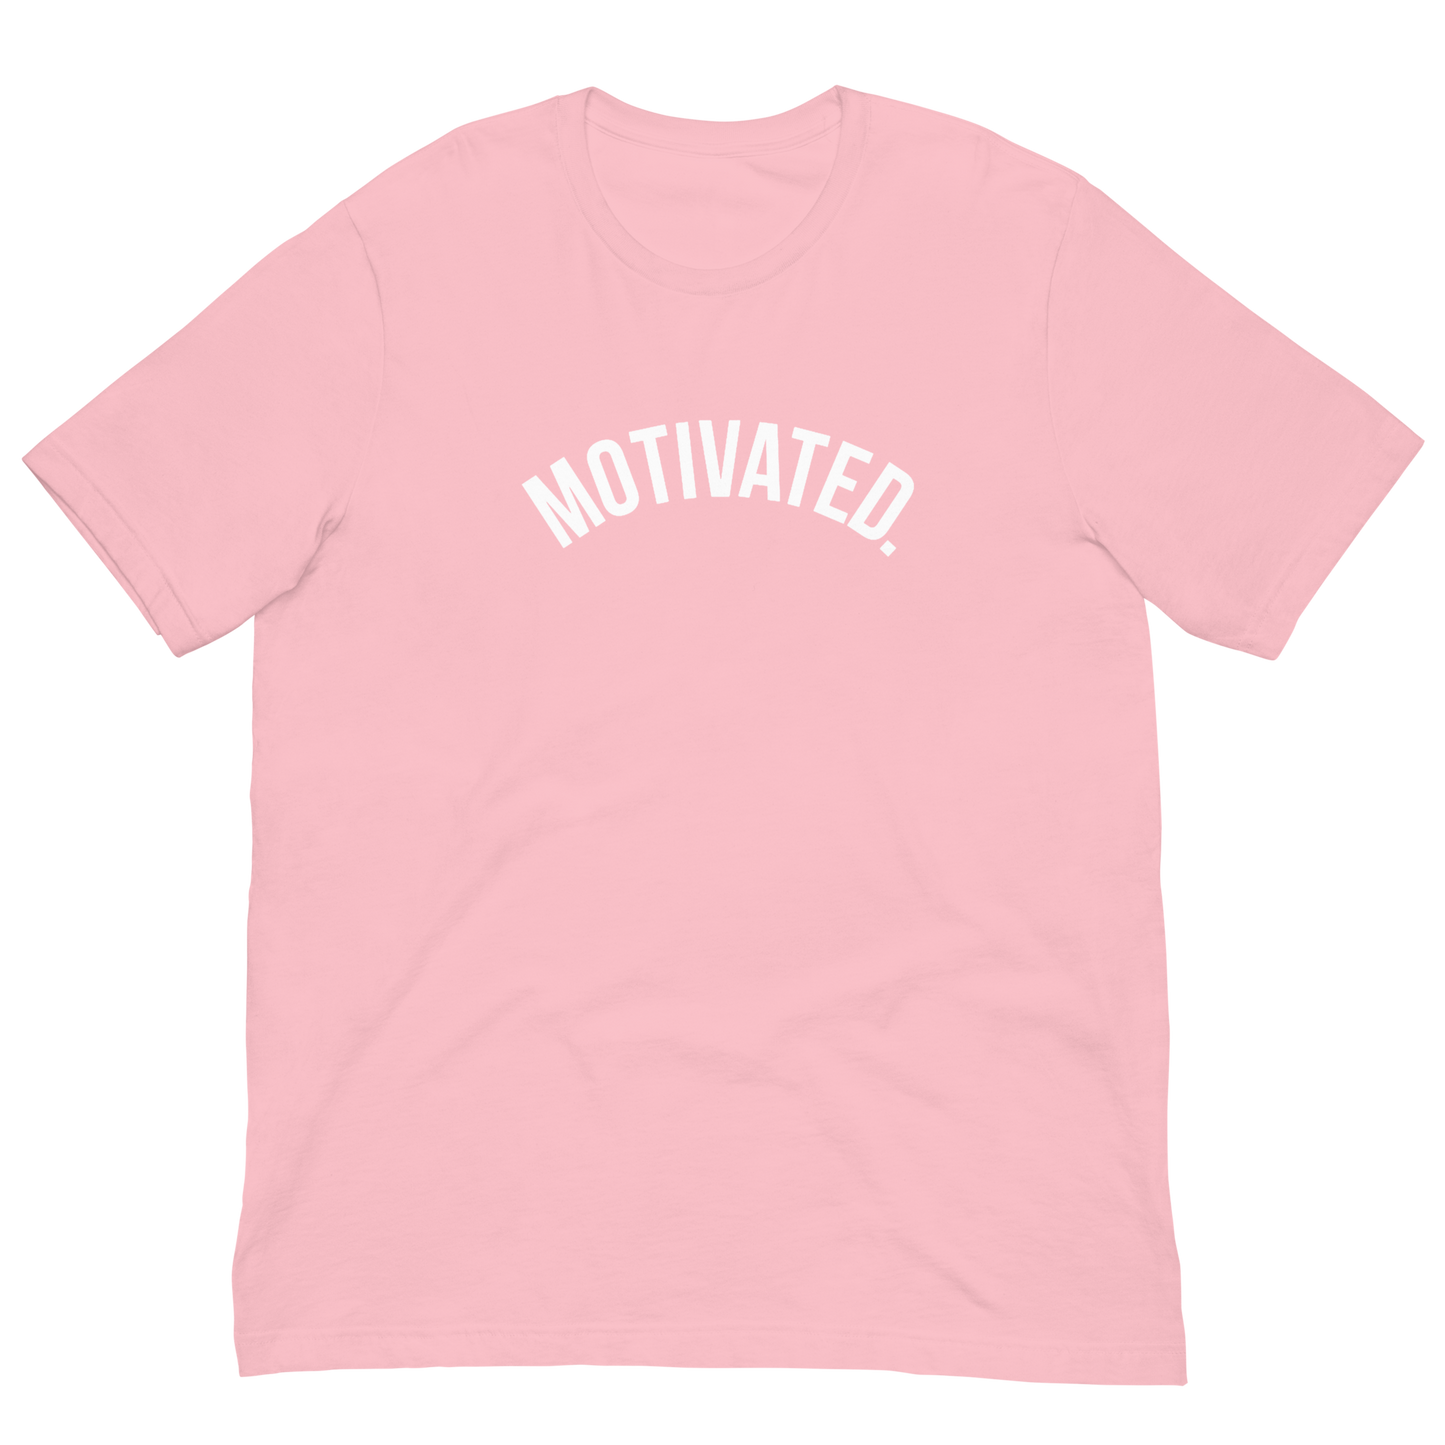 Motivated. T-Shirt